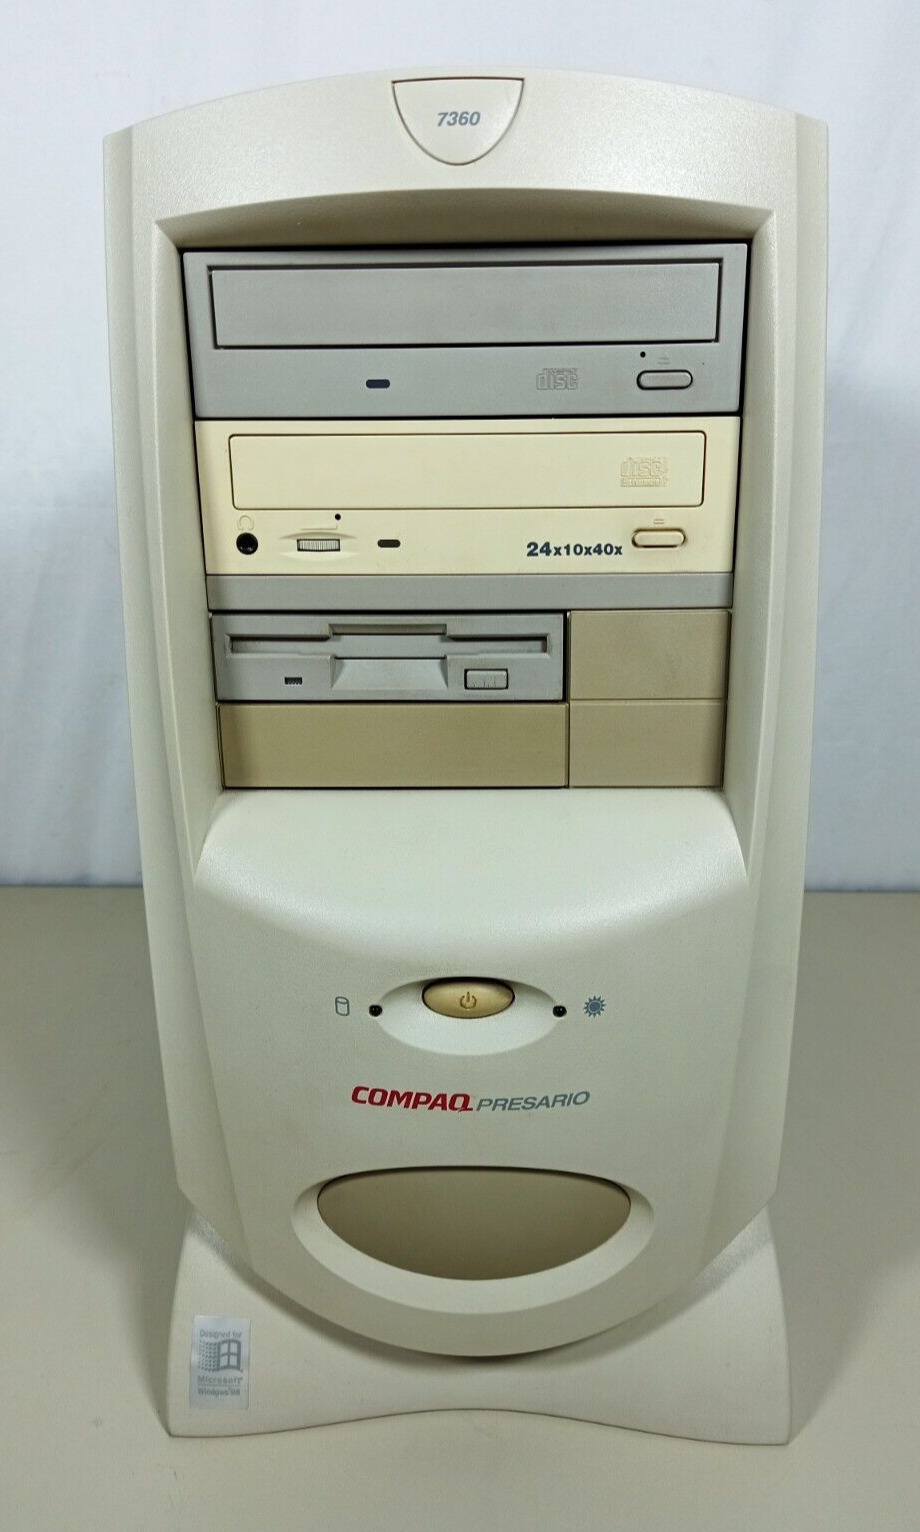 Compaq Presario 7360 Series CM0204 Desktop Computer Tower Retro Case